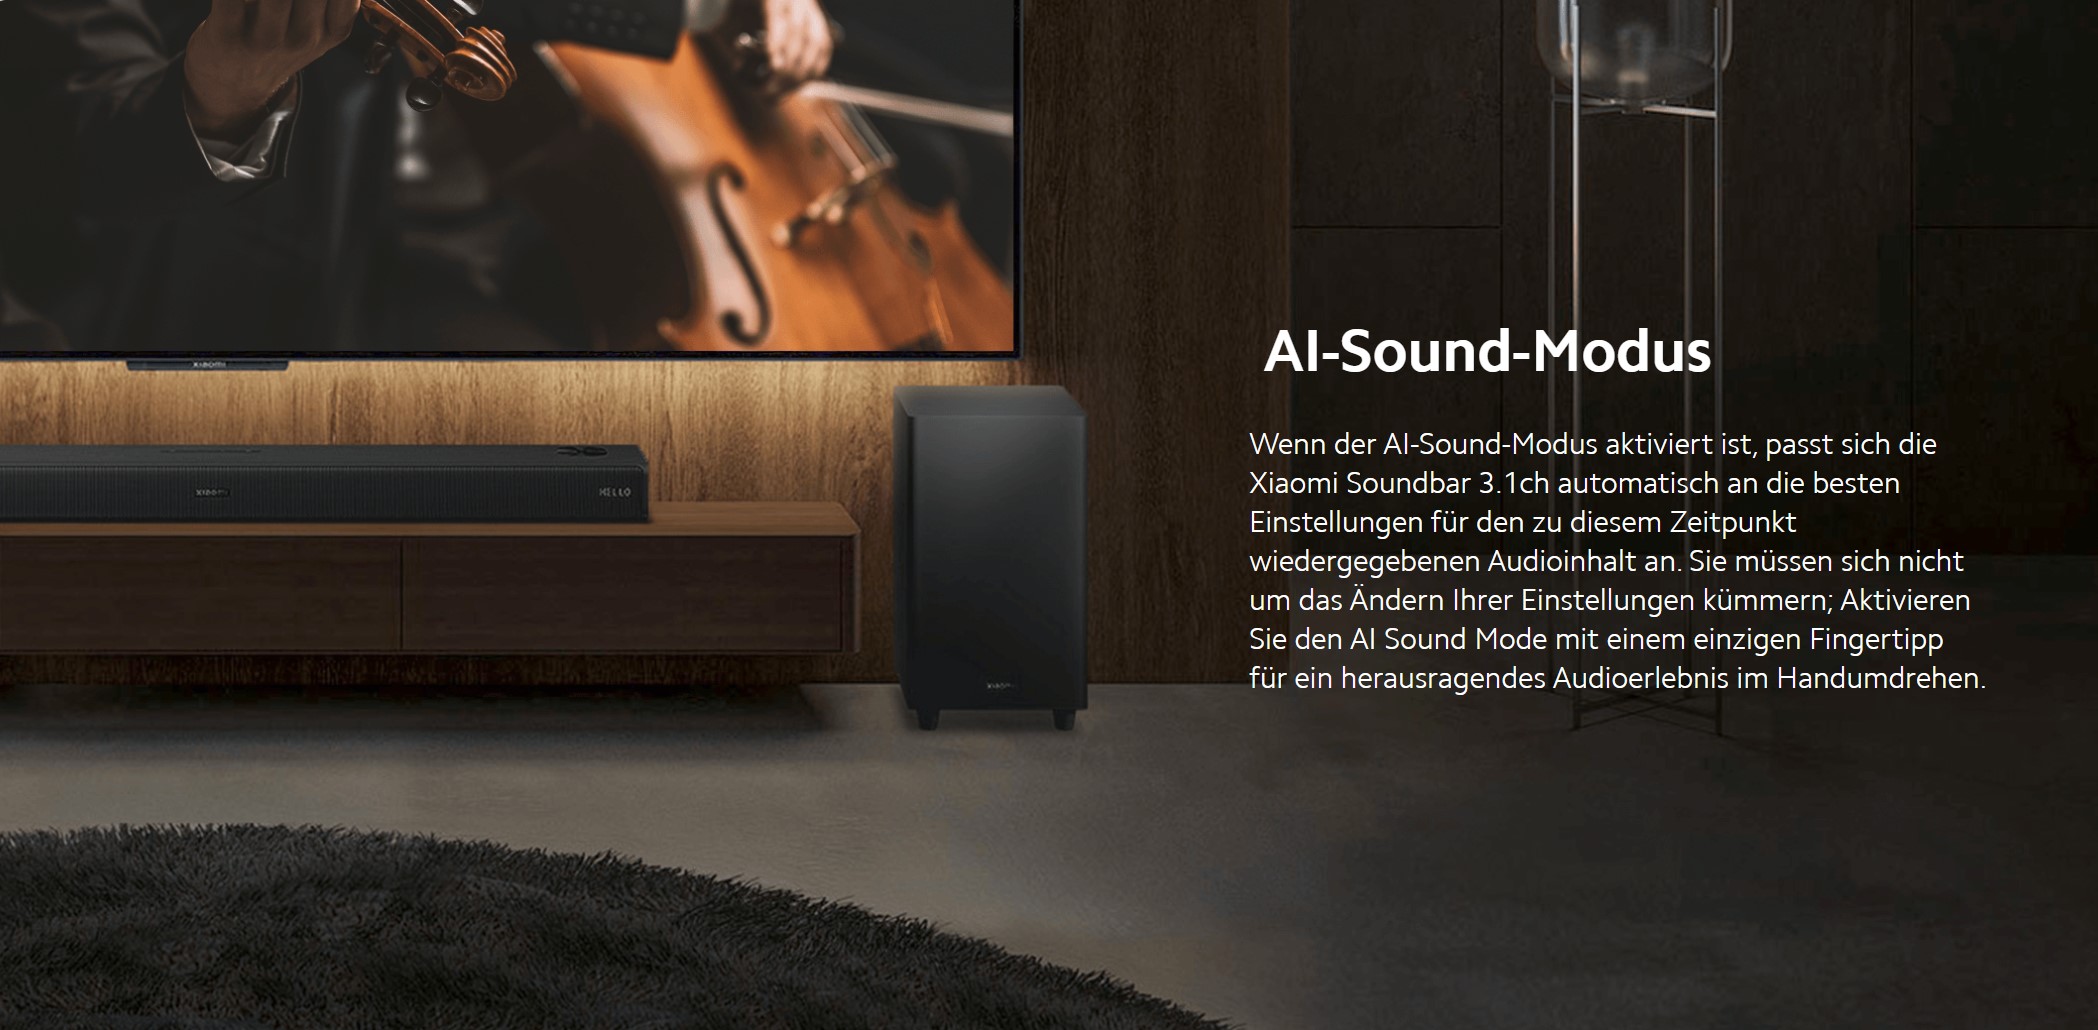 Xiaomi Soundbar 3.1ch mit AI Sound